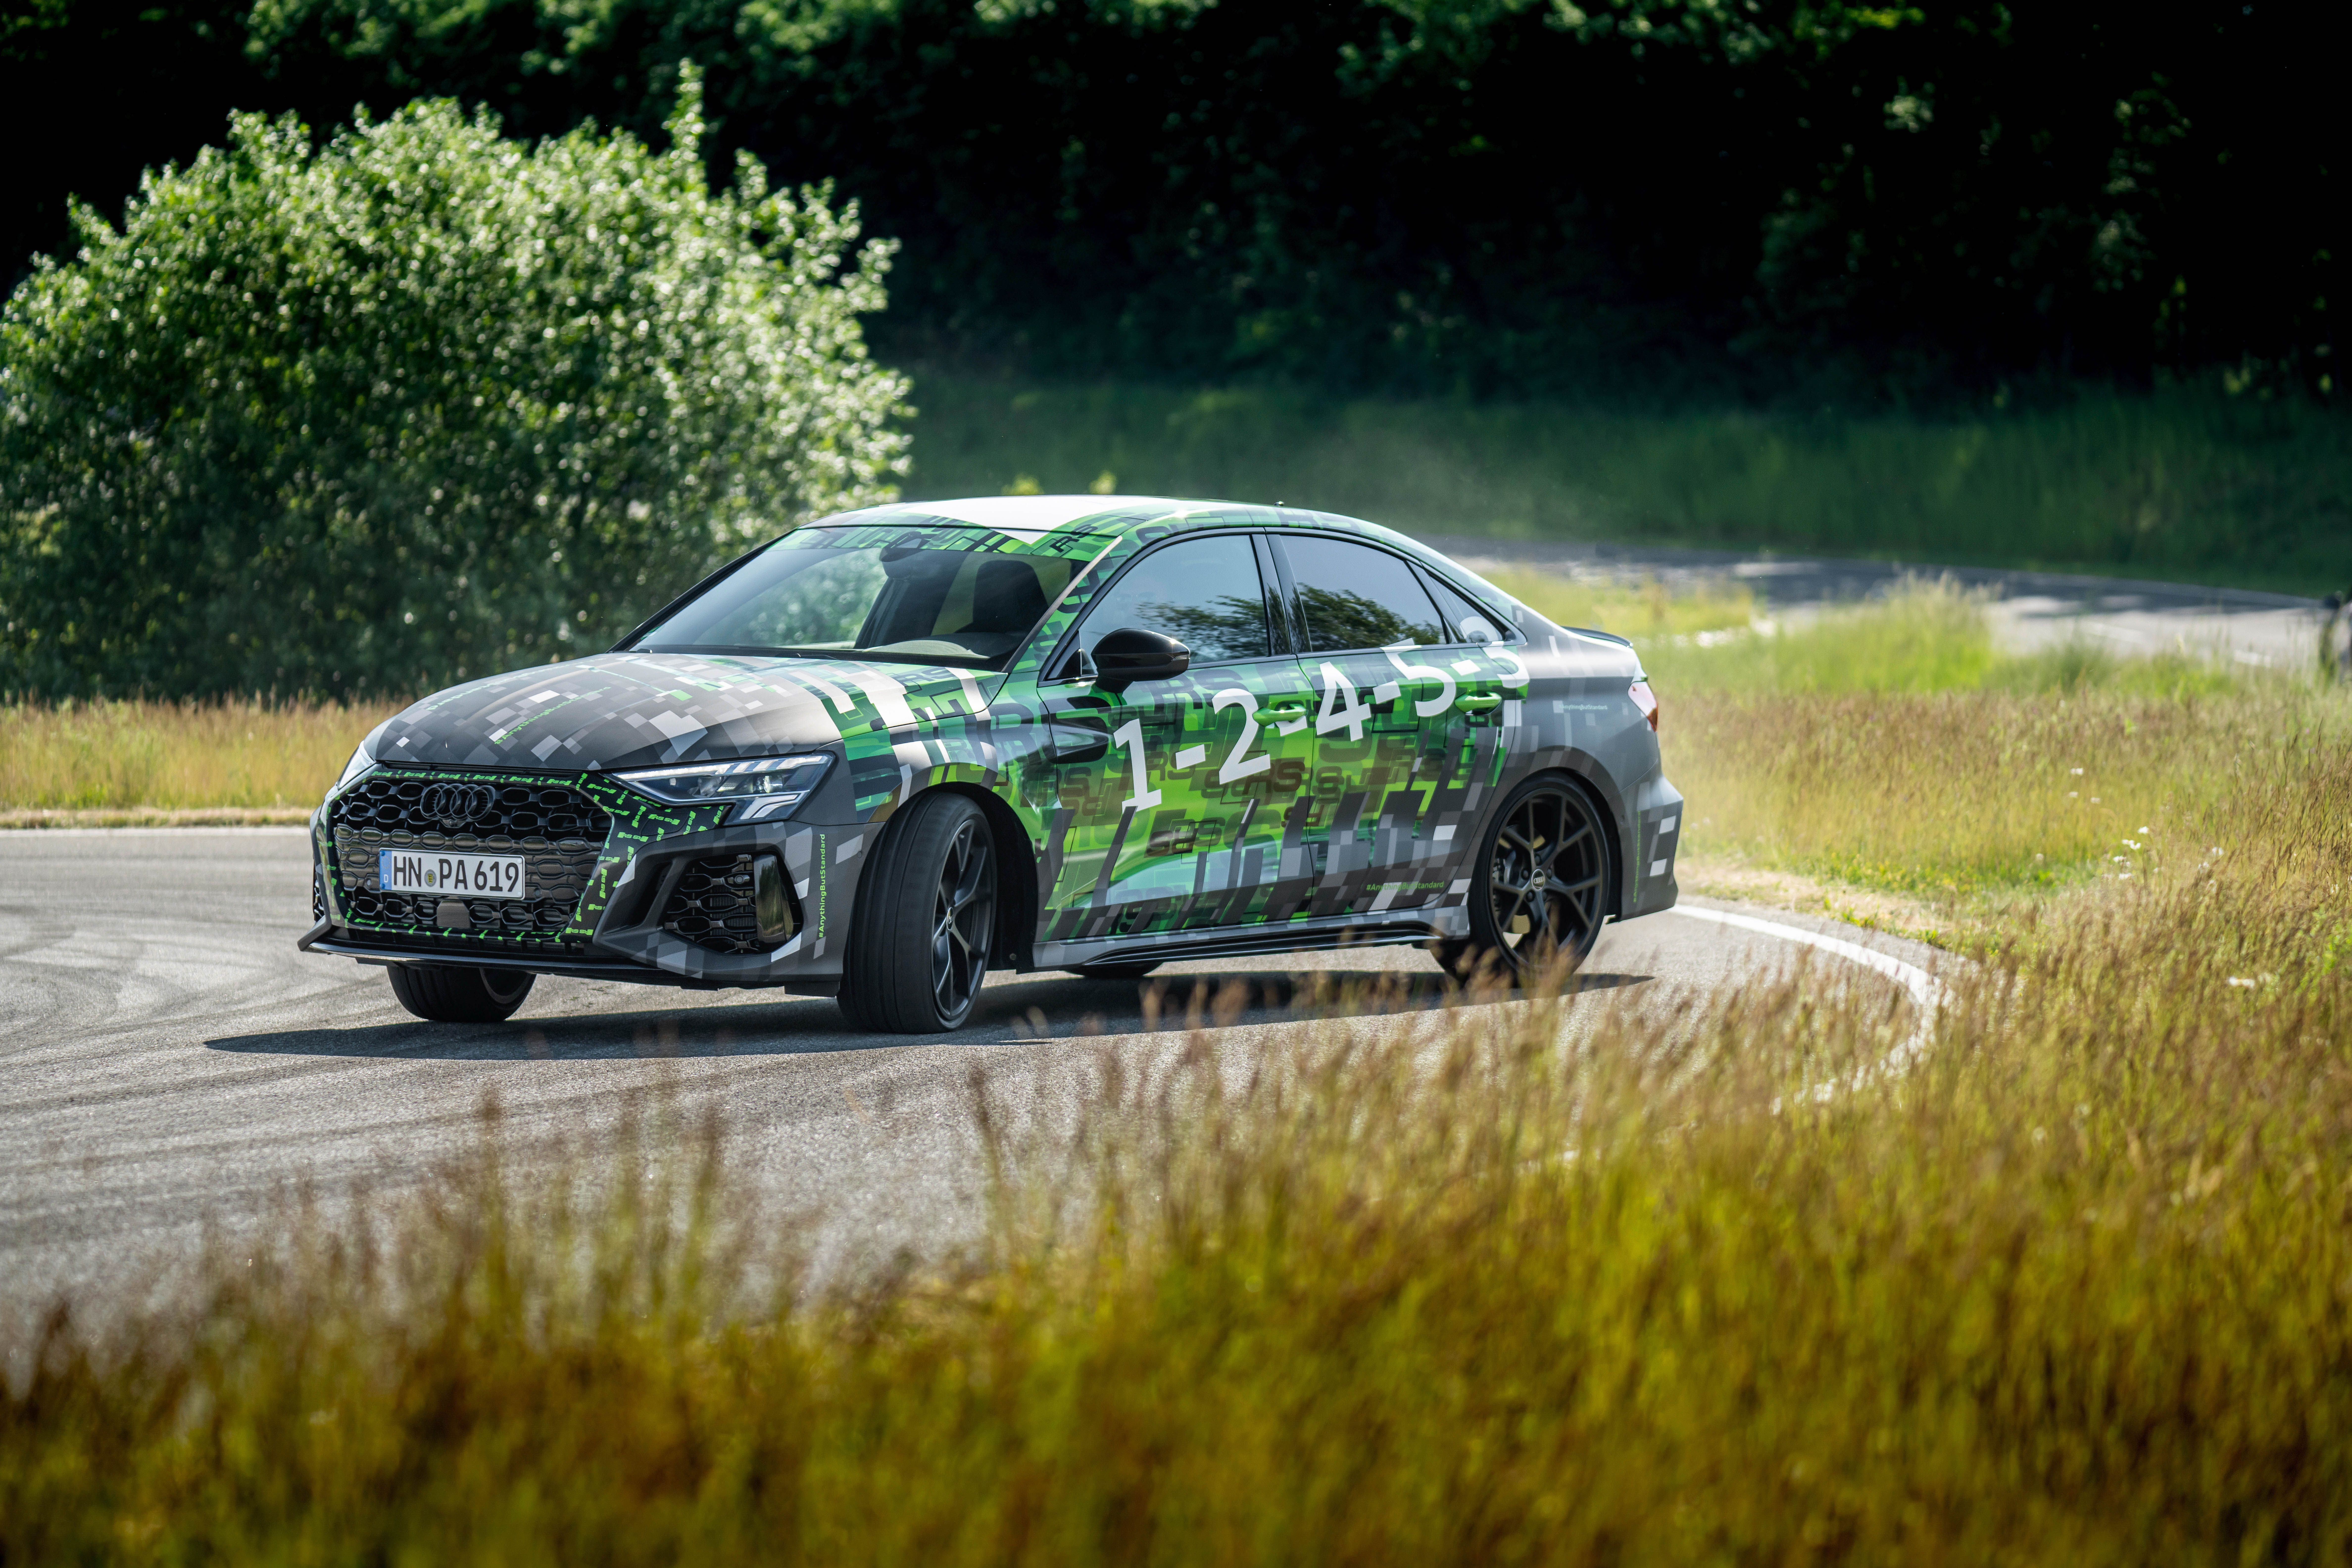 Manchuriet Thorny George Bernard This Week in Cars: Audi RS3, We Hear the C8 Z06, 620-Mile Mercedes EV